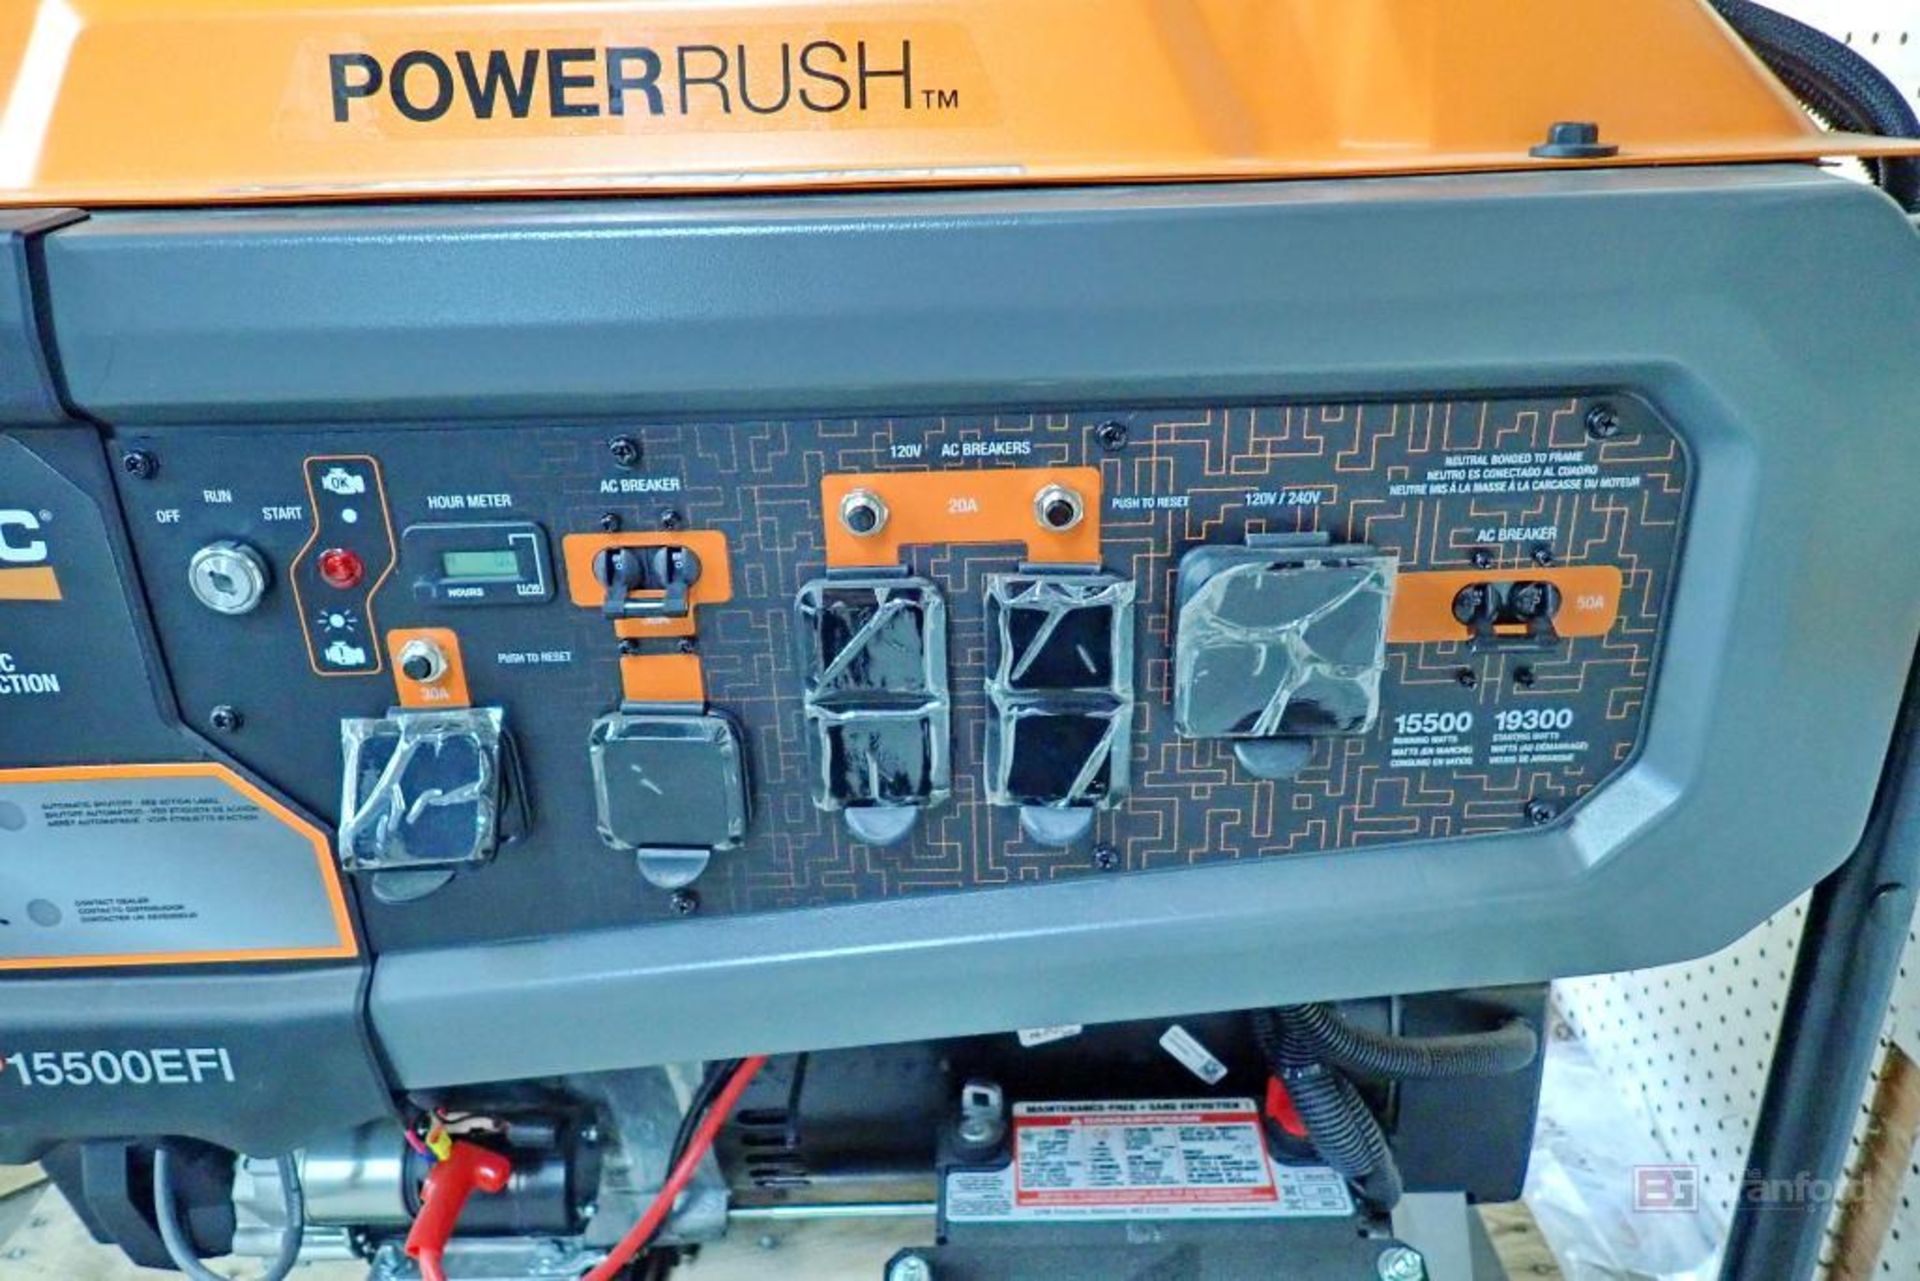 GENERAC Power Rush GP15500EFI Gas Powered Generator - Image 9 of 11